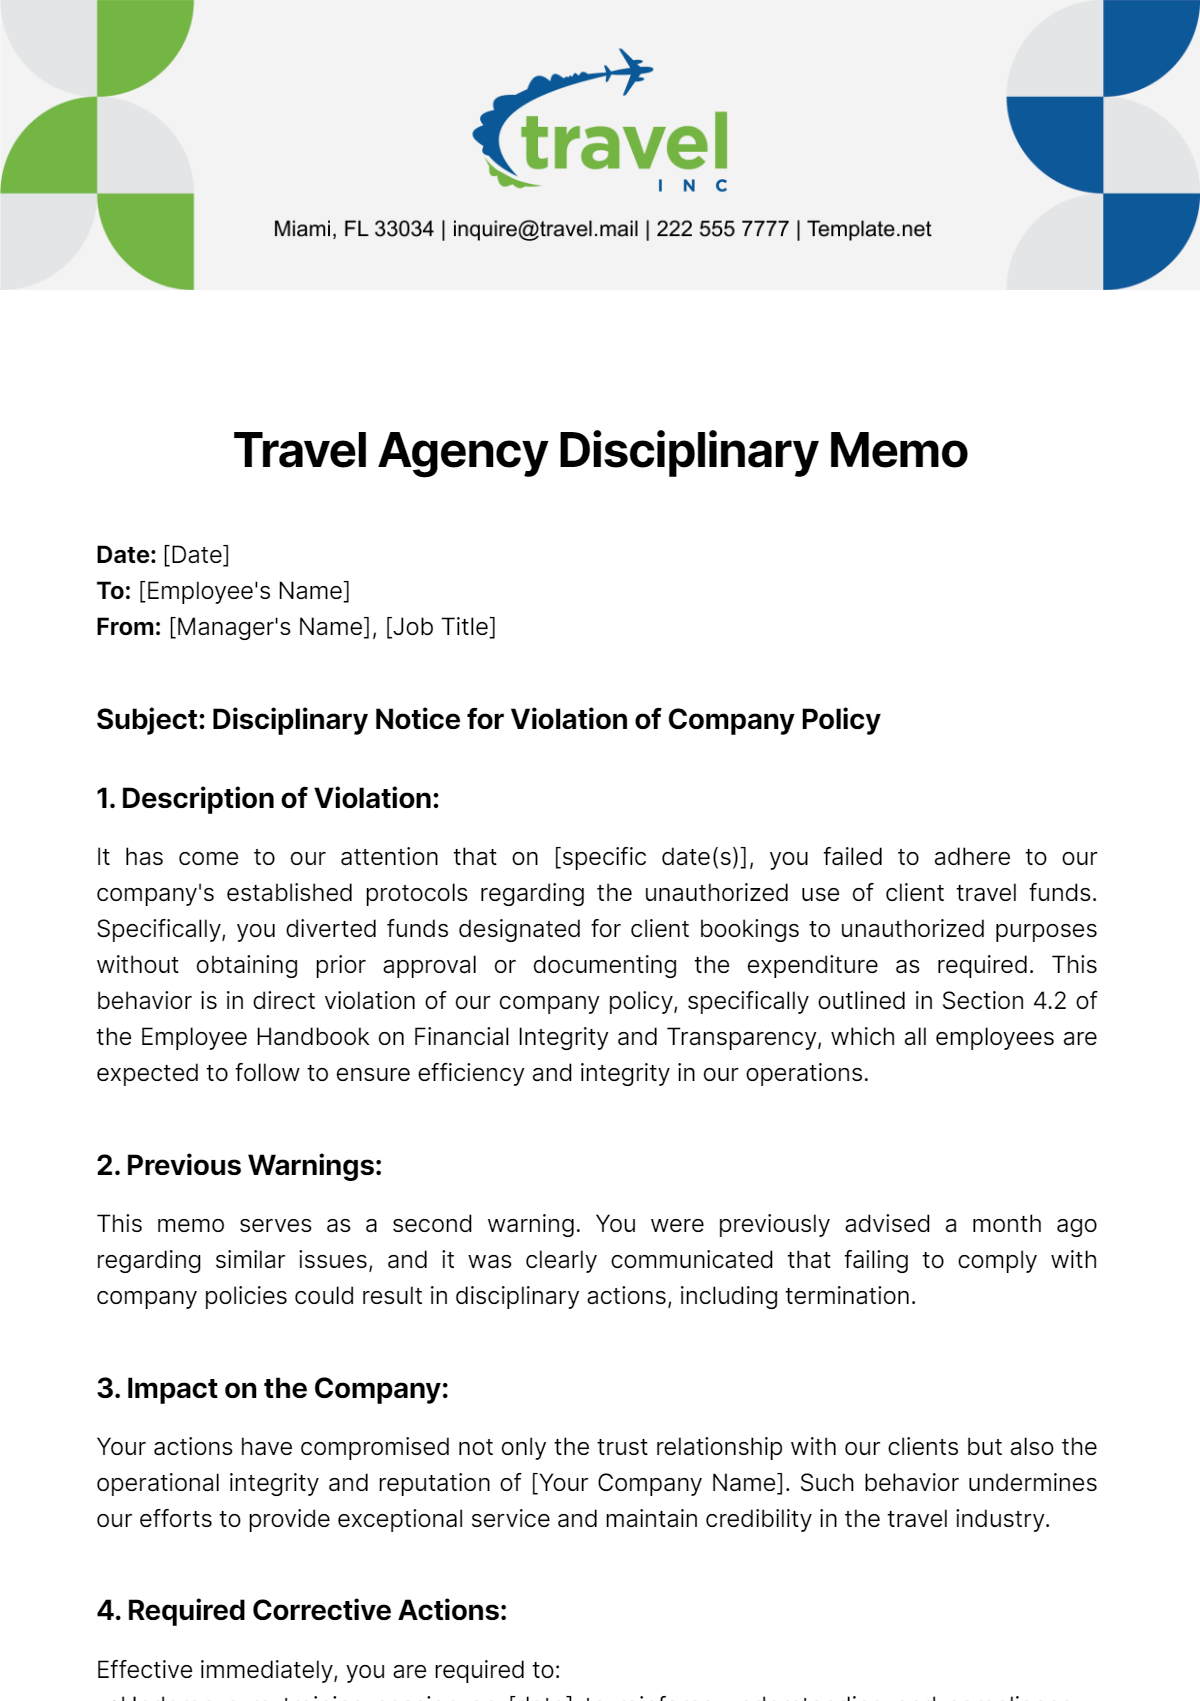 Free Travel Agency Disciplinary Memo Template